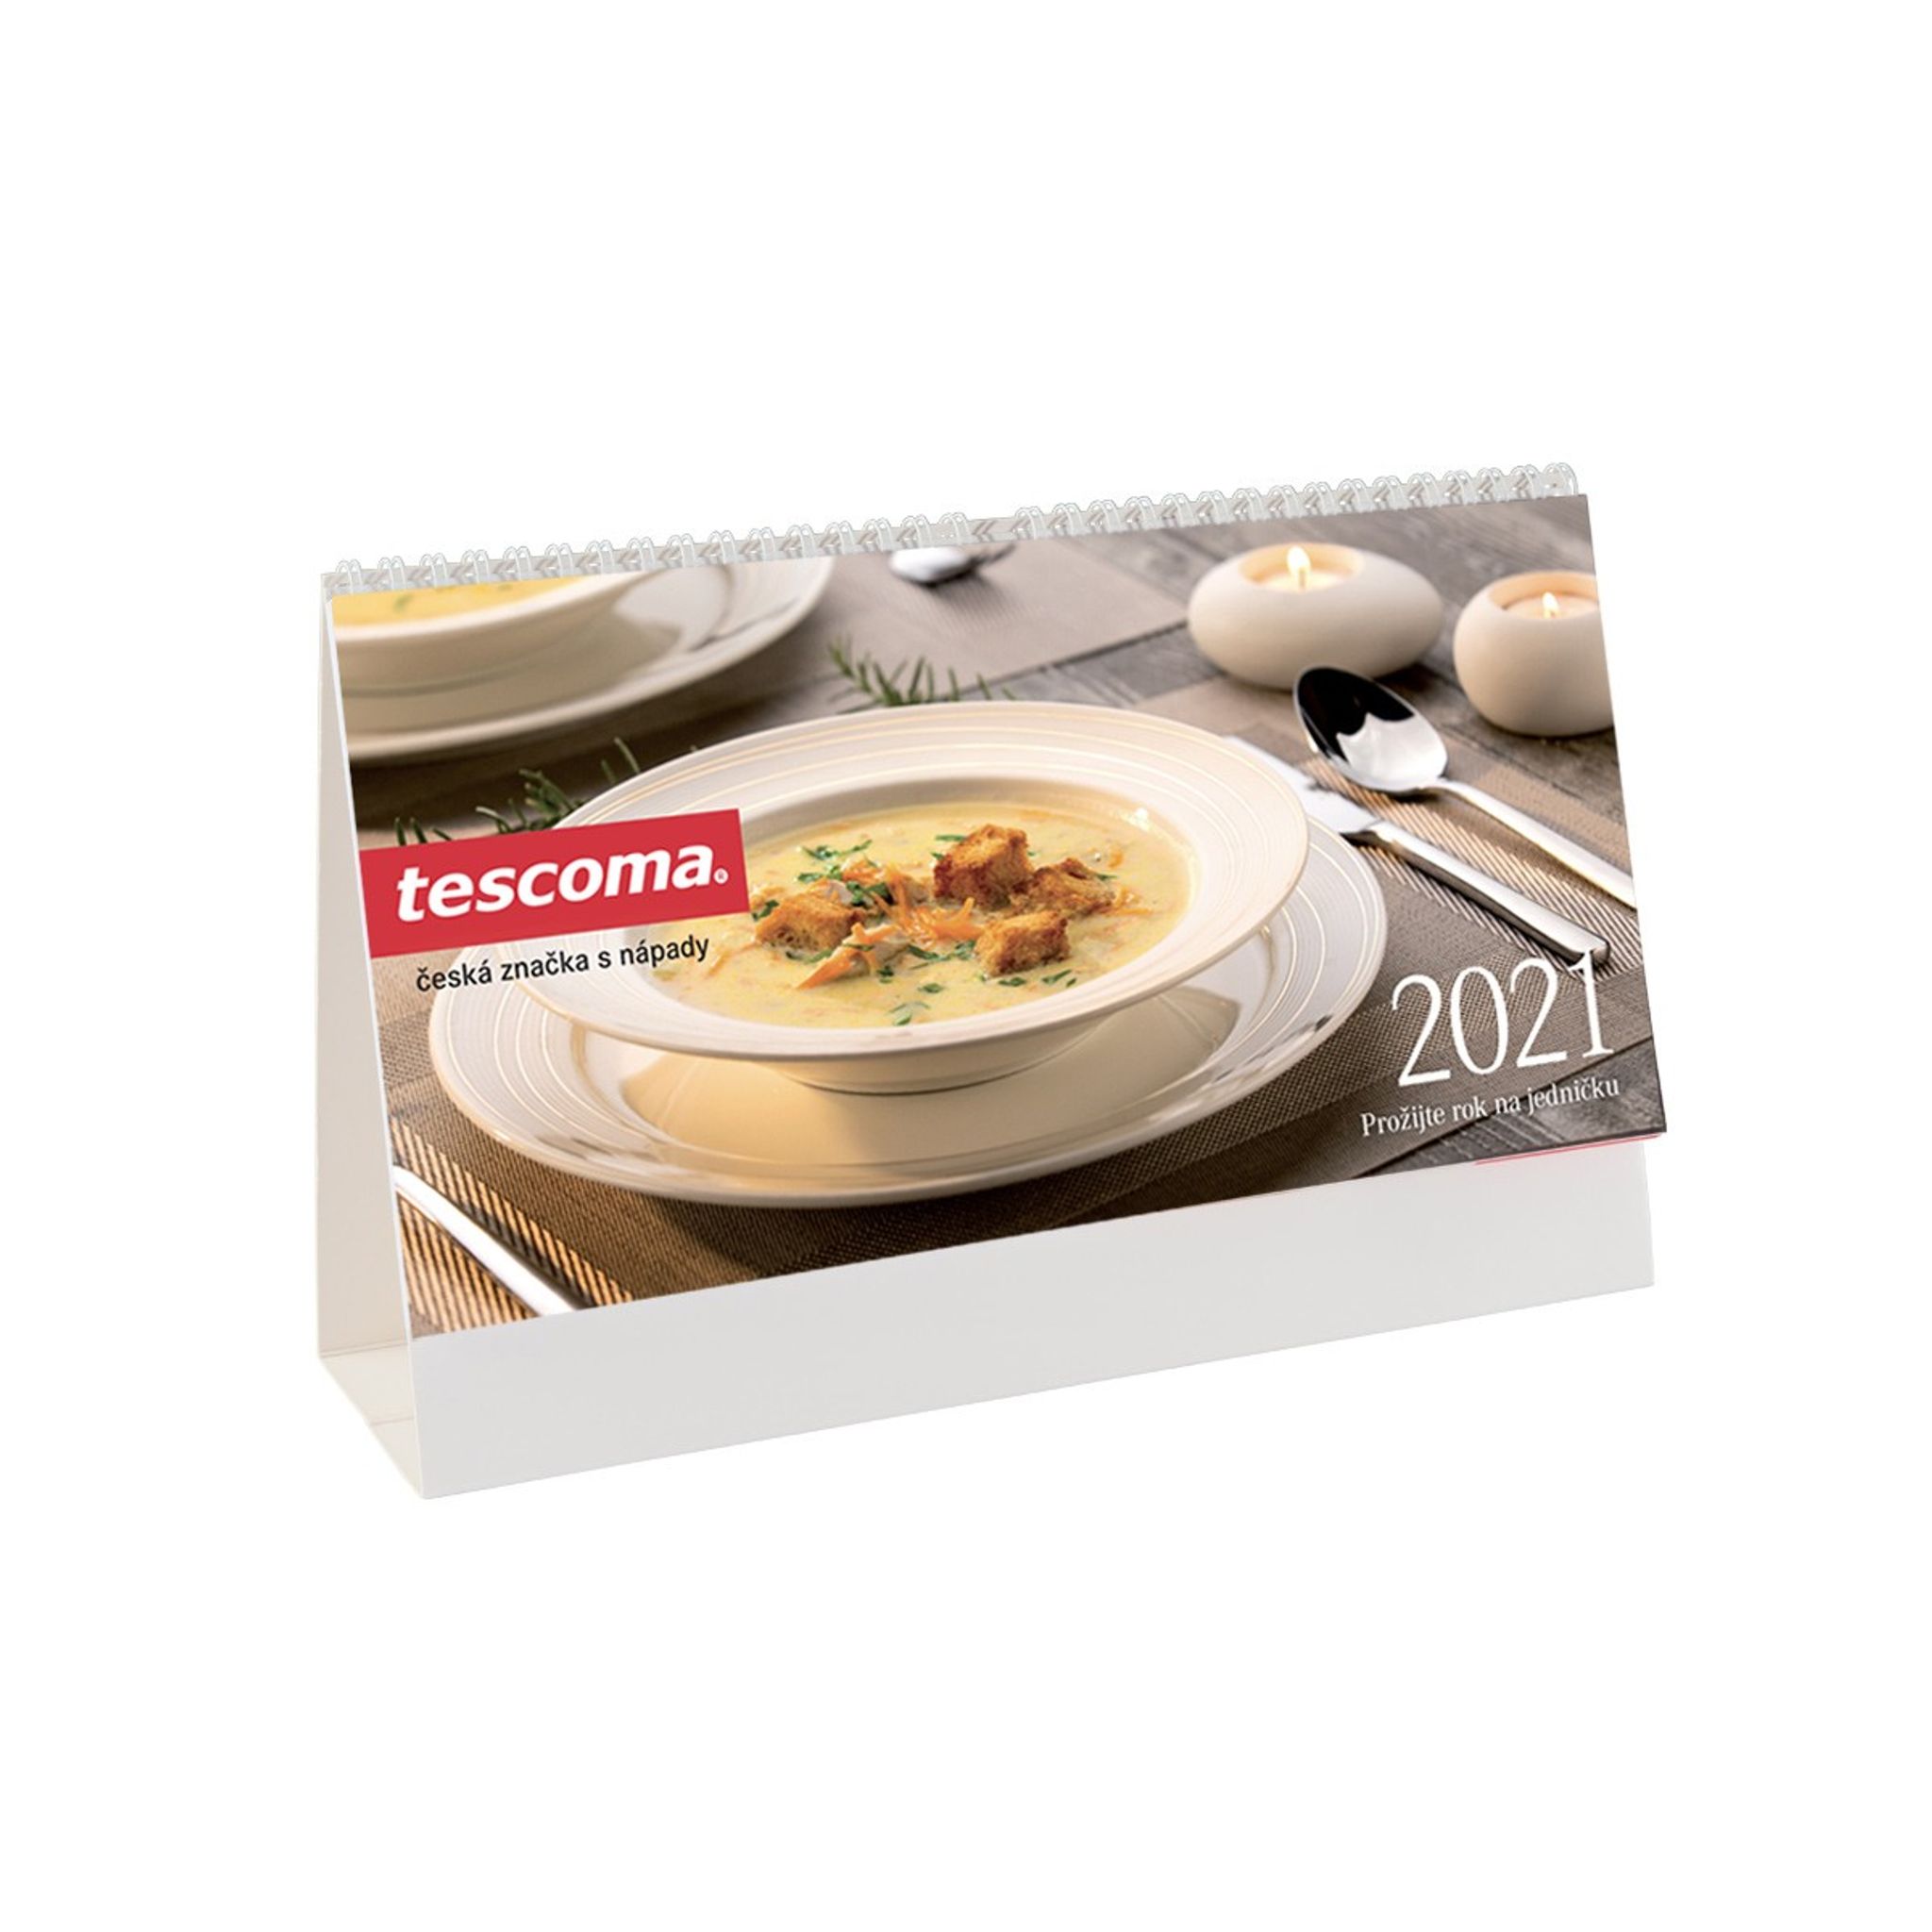 Kalendář s kuchařkou TESCOMA 2021